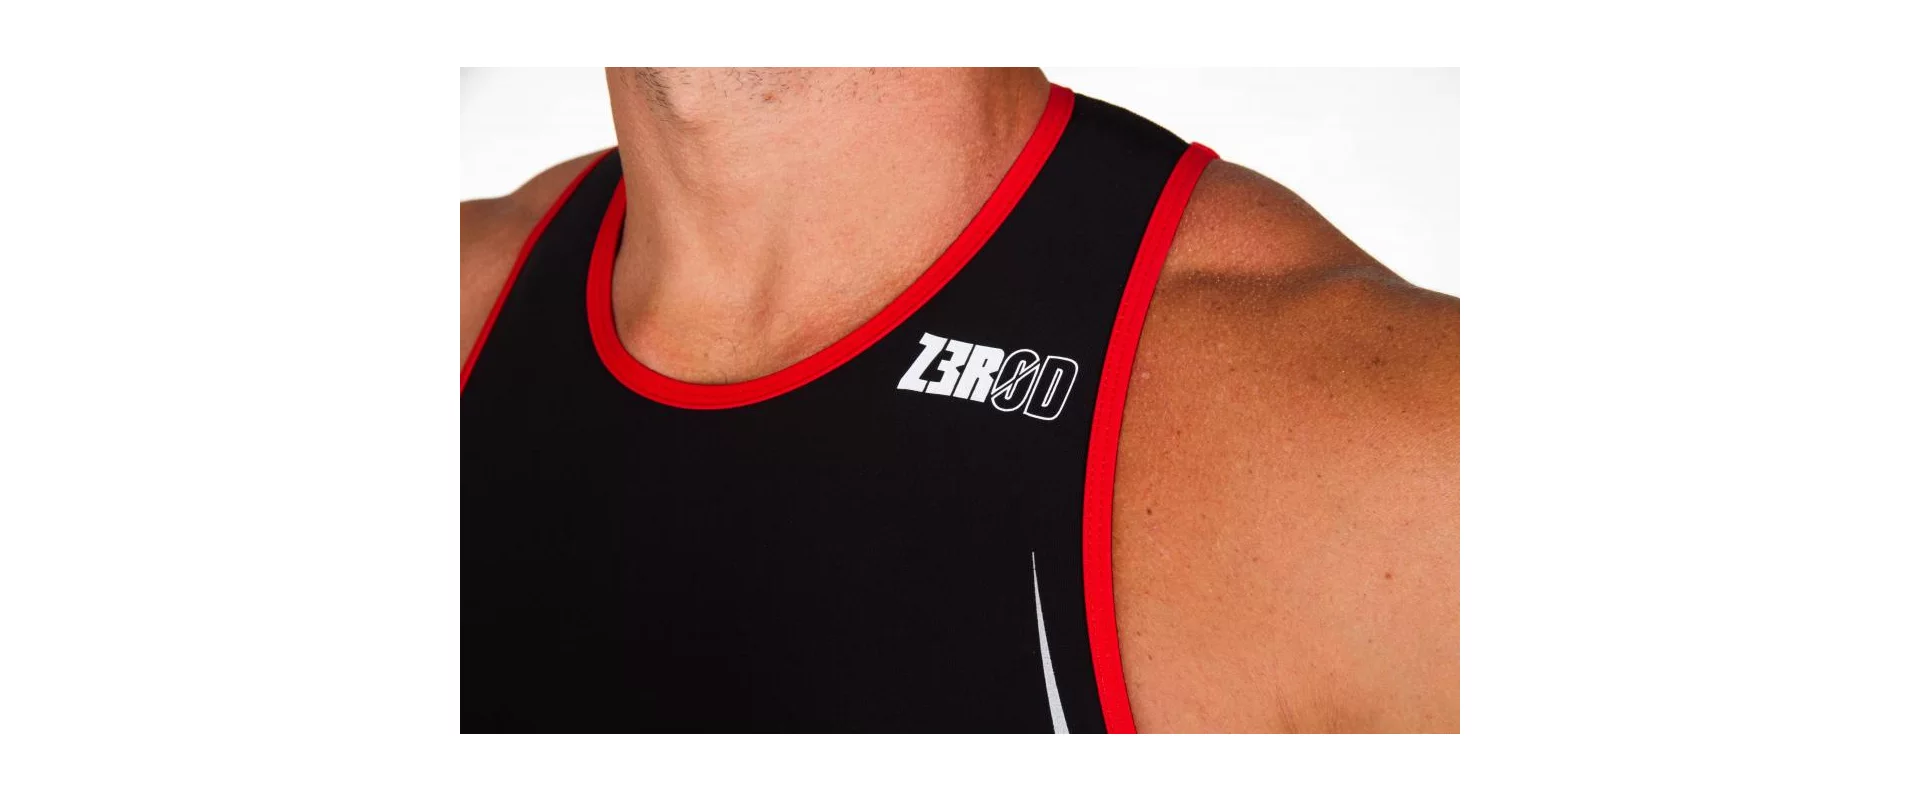 Z3R0D Racer Red / Мужской стартовый костюм для триатлона без рукавов фото 5